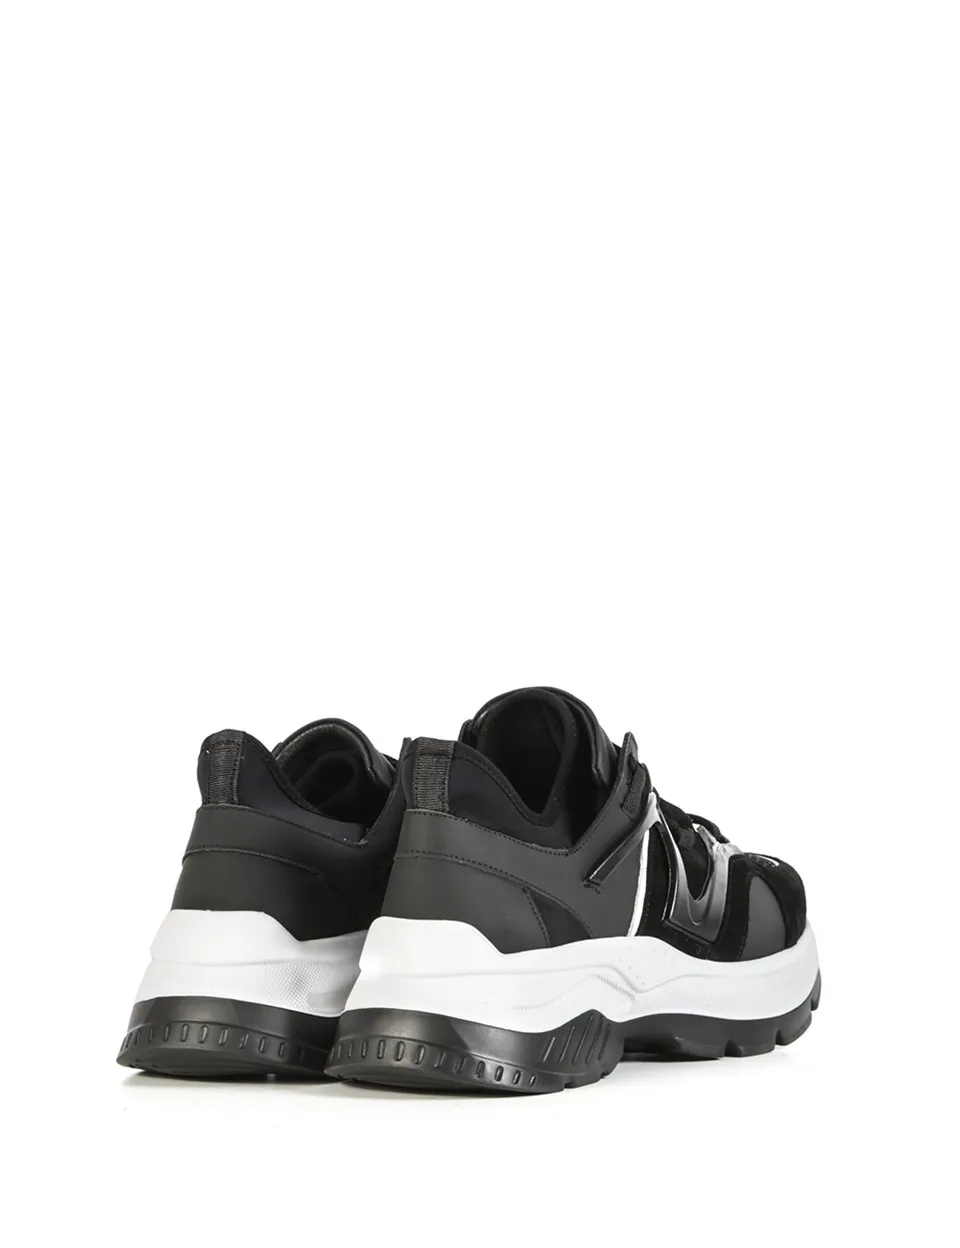 

ILVi-Genuine Leather Handmade Hurst Men's Sneaker Black Suede-Black Taffeta Men Shoes (Made in Turkey)